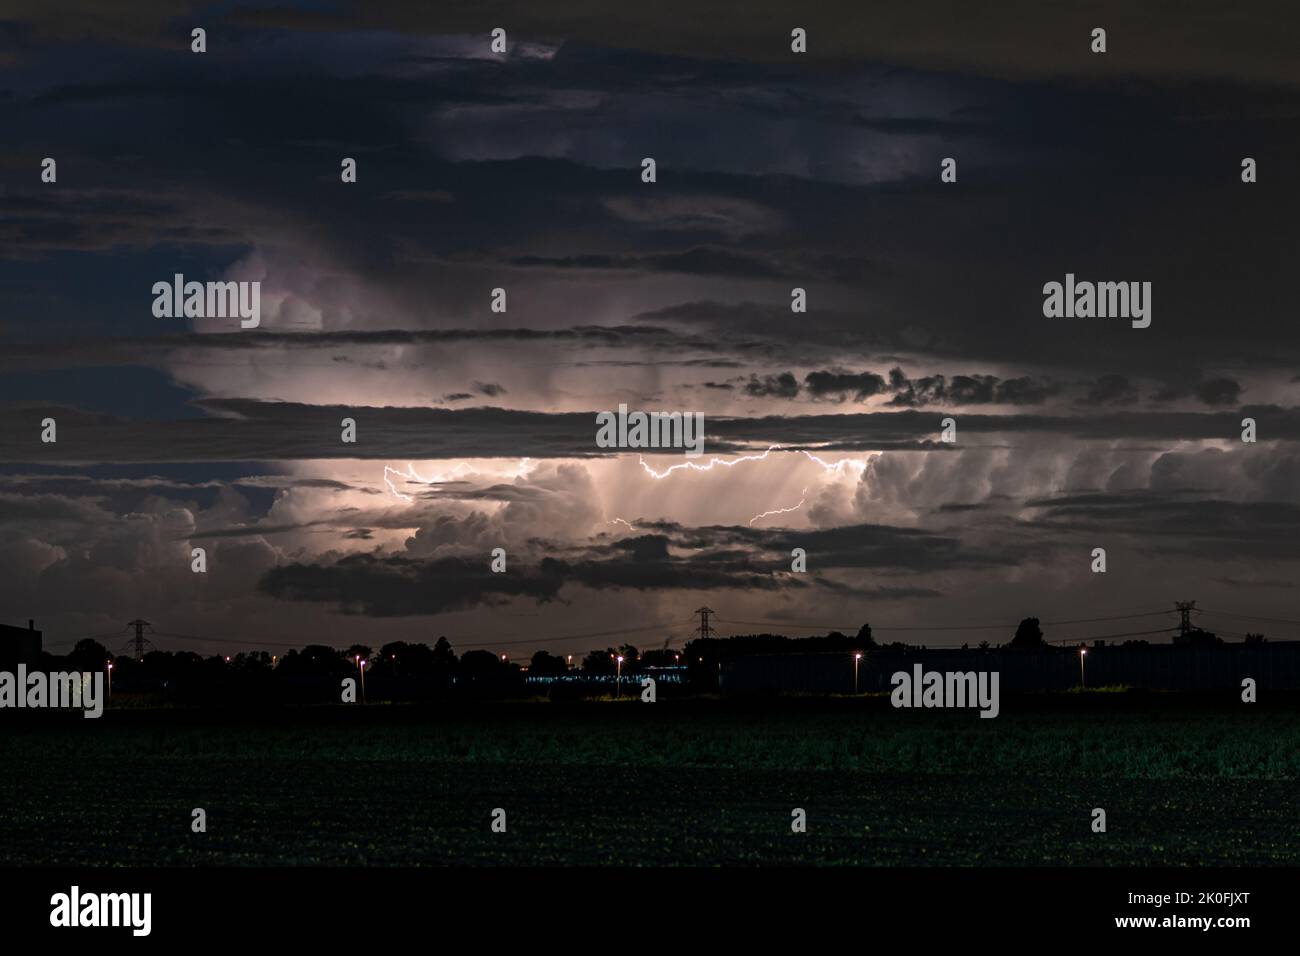 A Cumulonimbus storm cloud is lit up by lightning at night Stock Photo